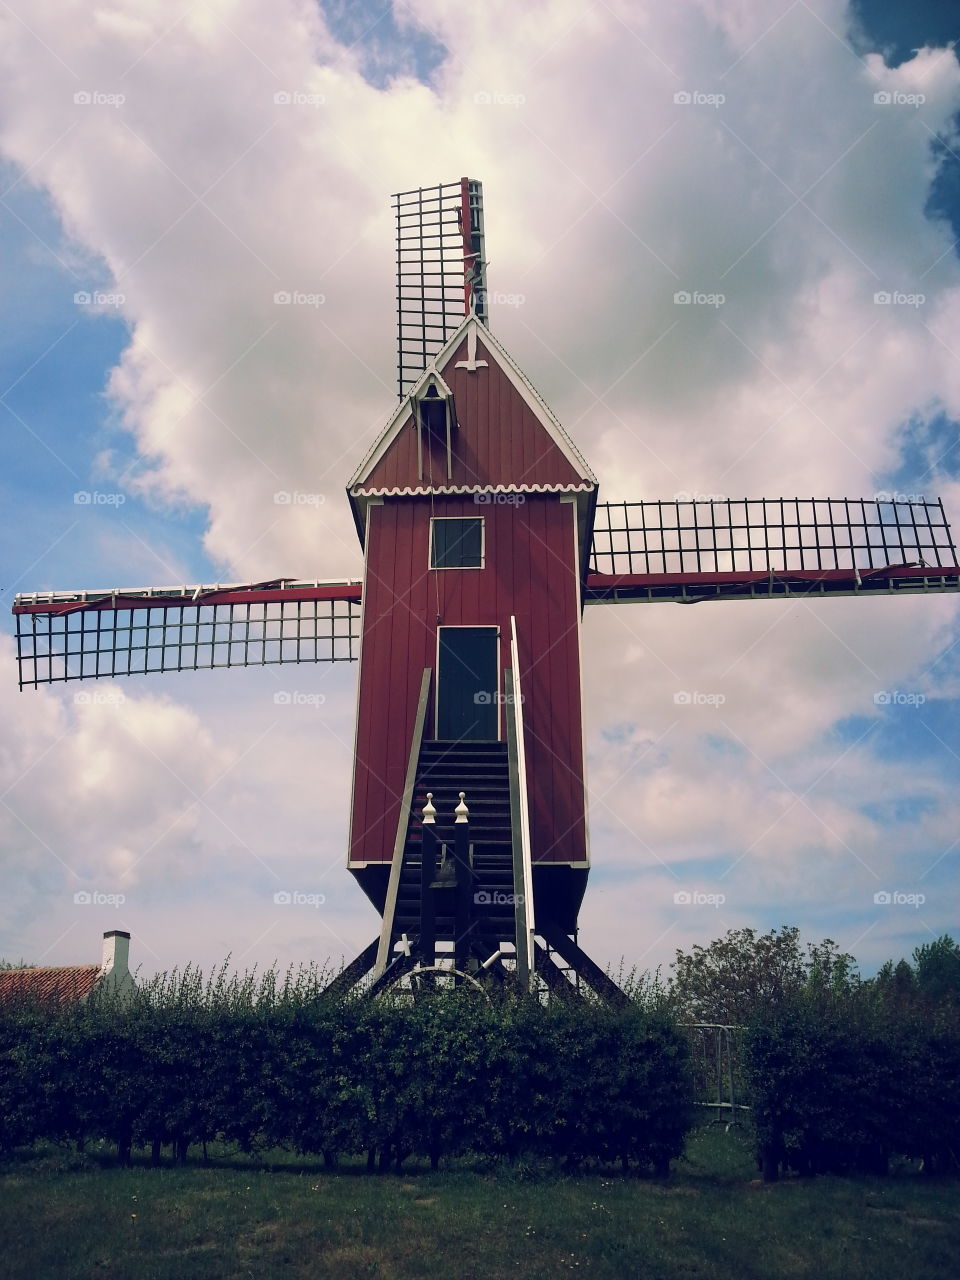 A classic Dutch windmill